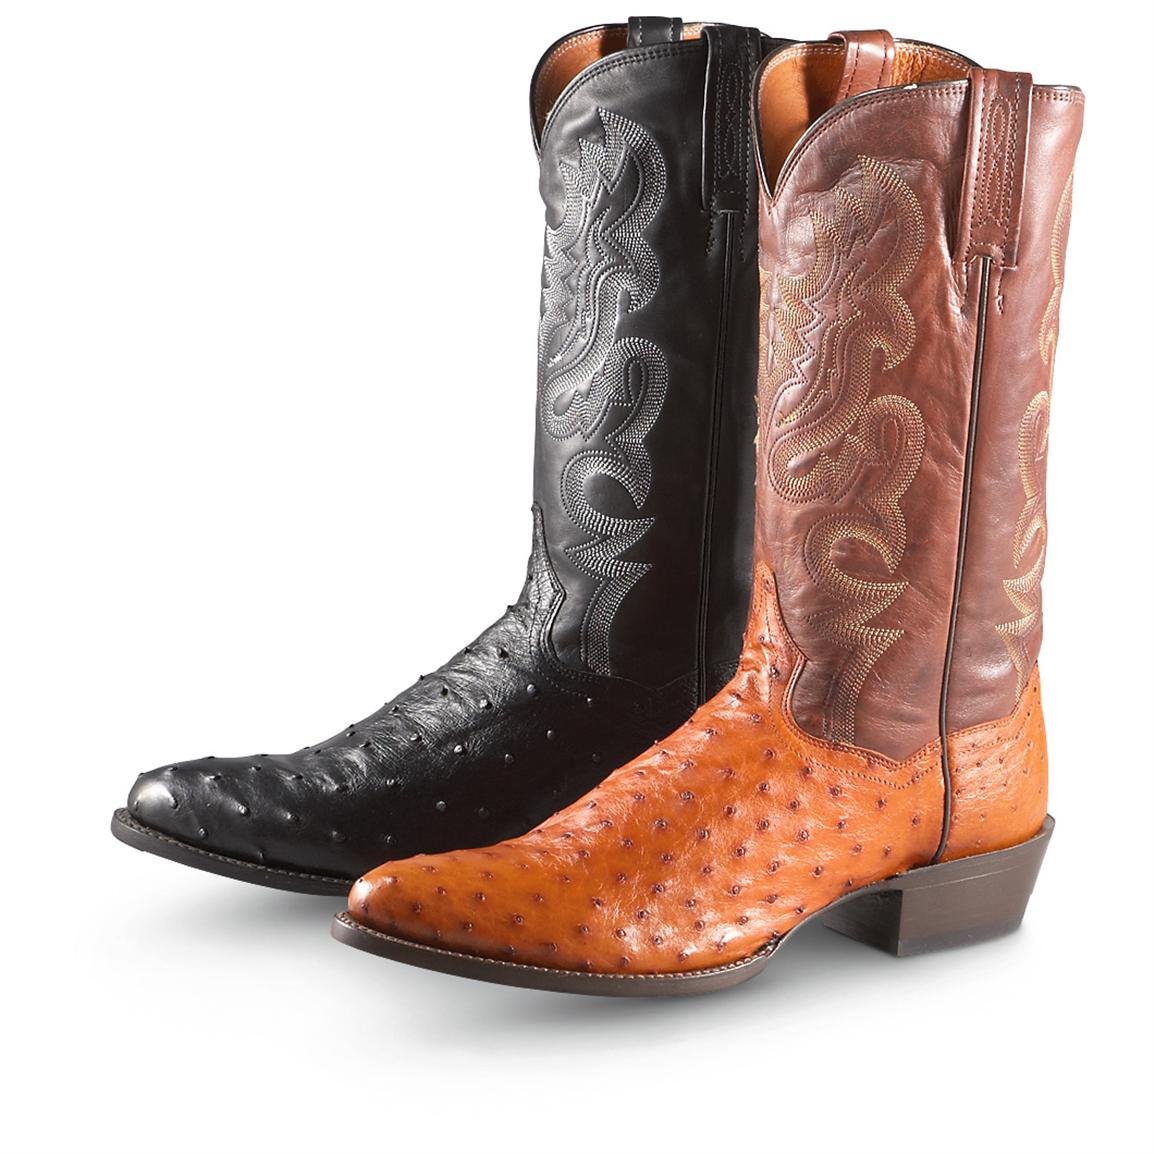 Ostrich Cowboy Boots For Men | vlr.eng.br